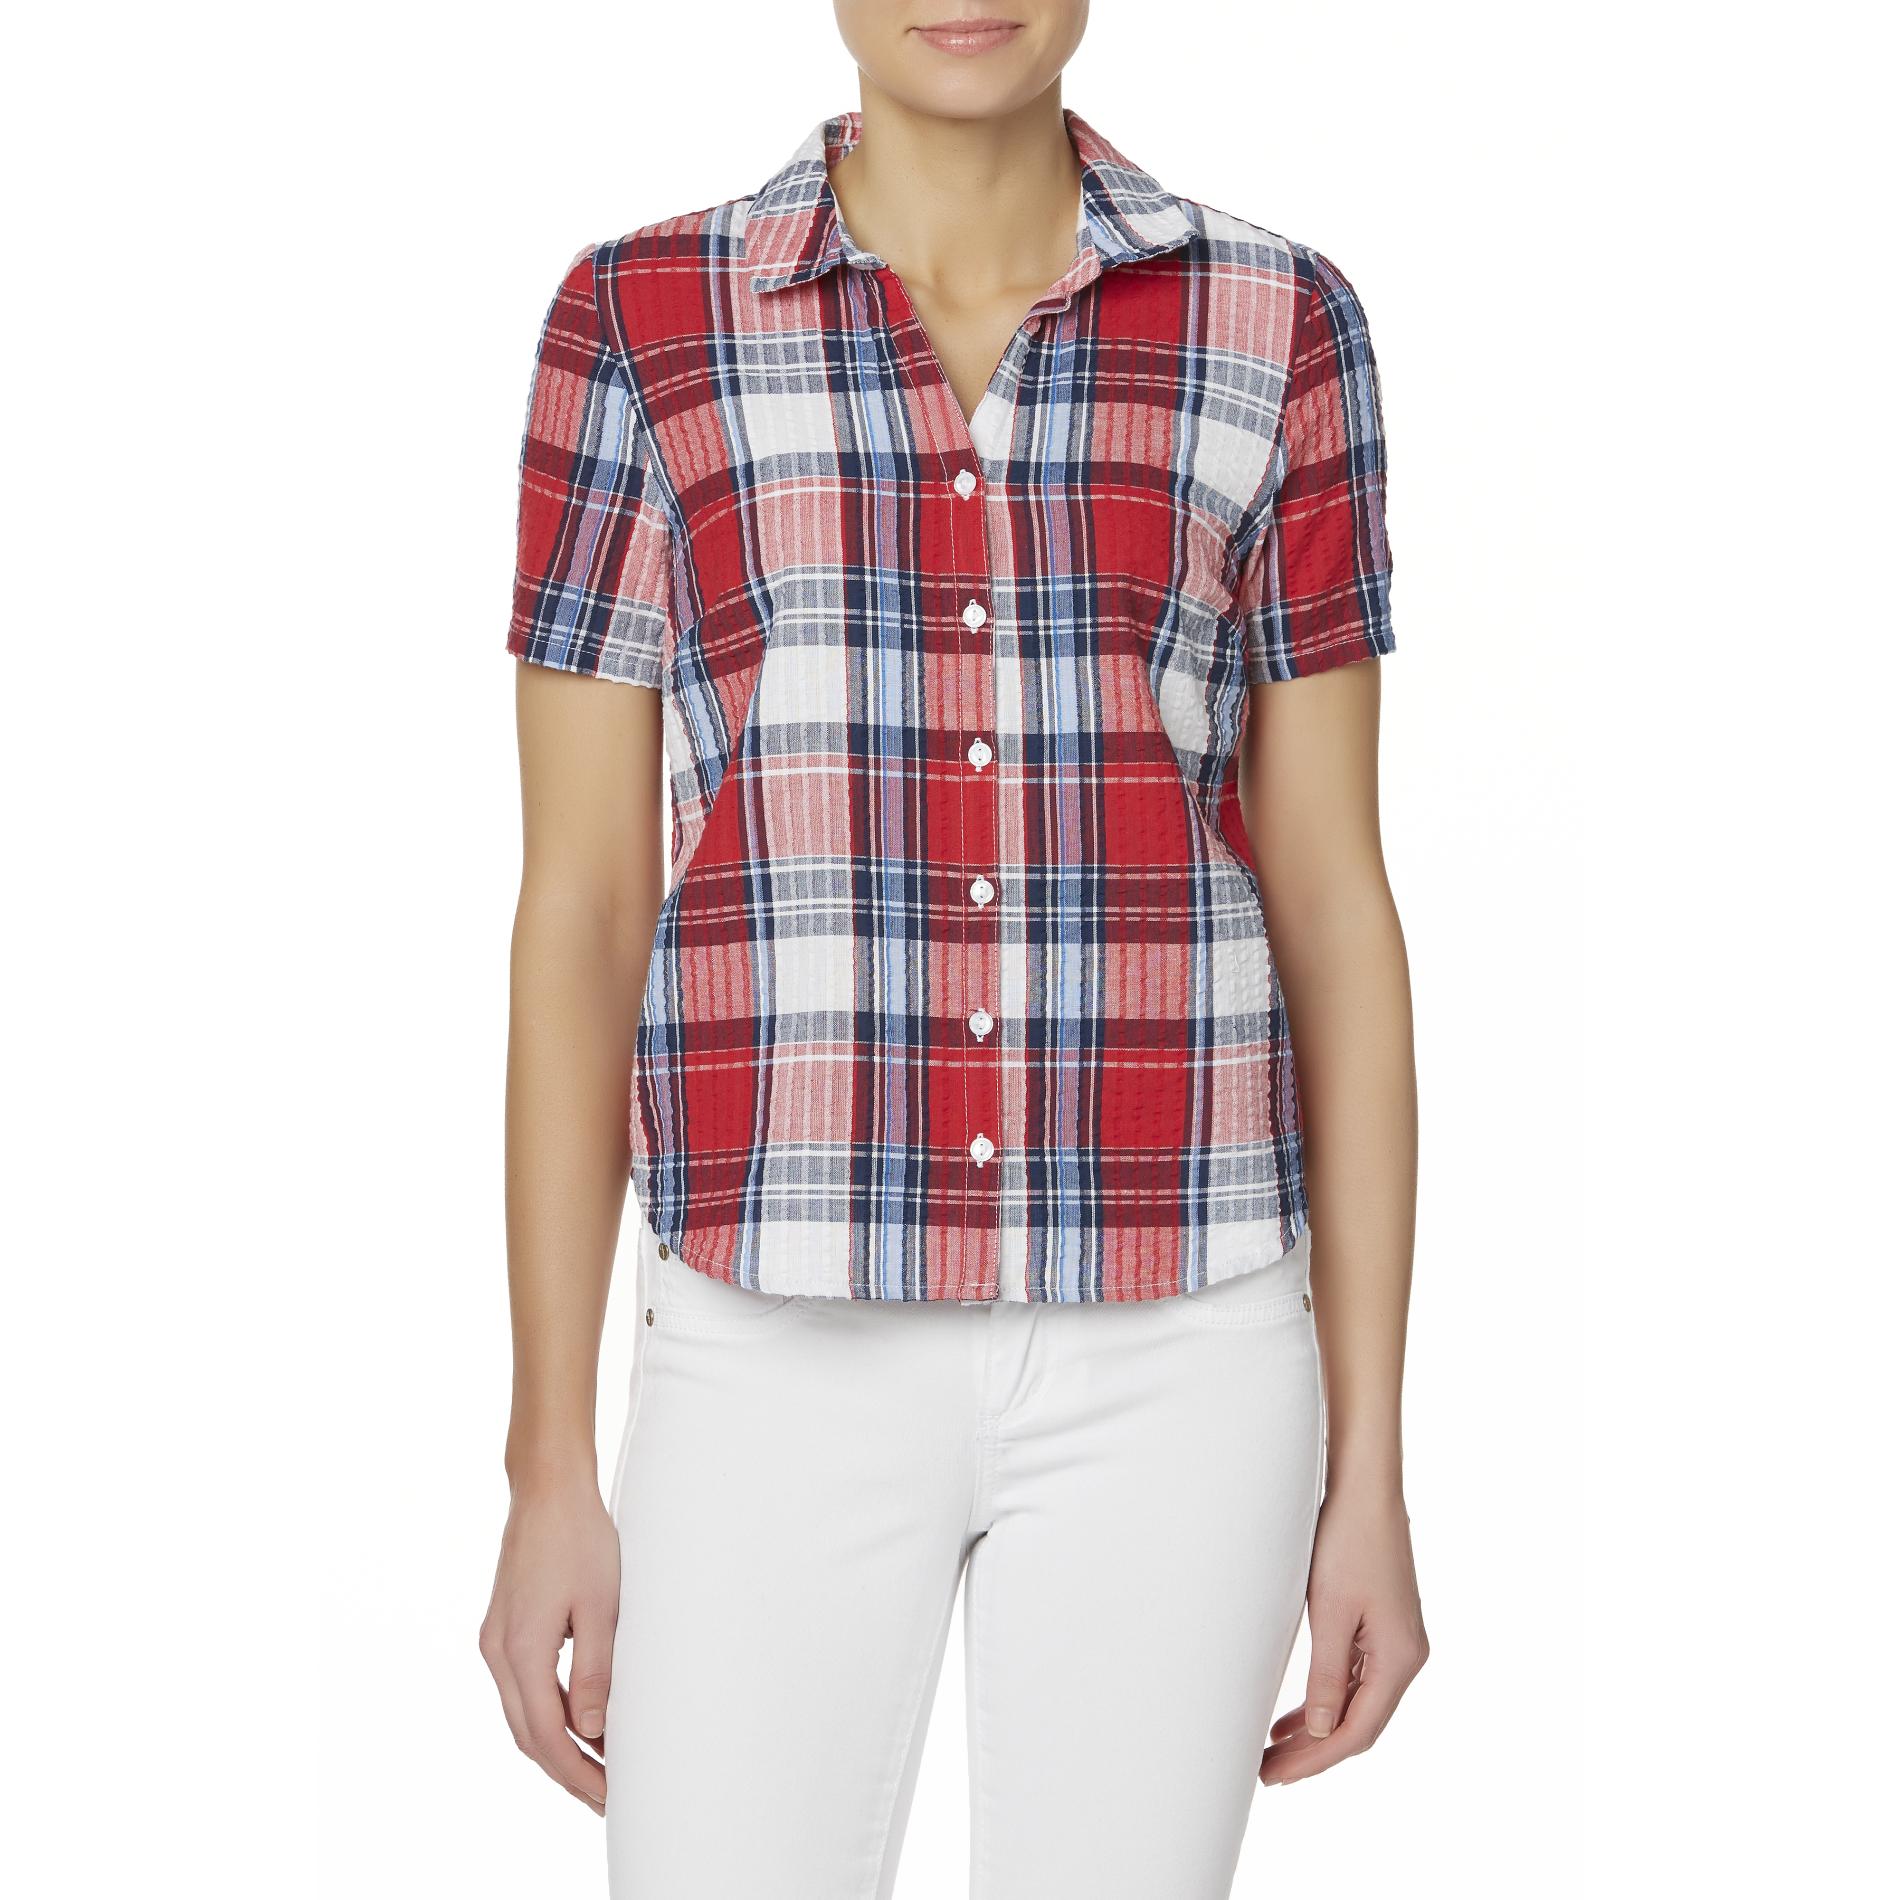 Erika blouses xl for women size 12 – Spring trends 2020 men, gap puffer ...